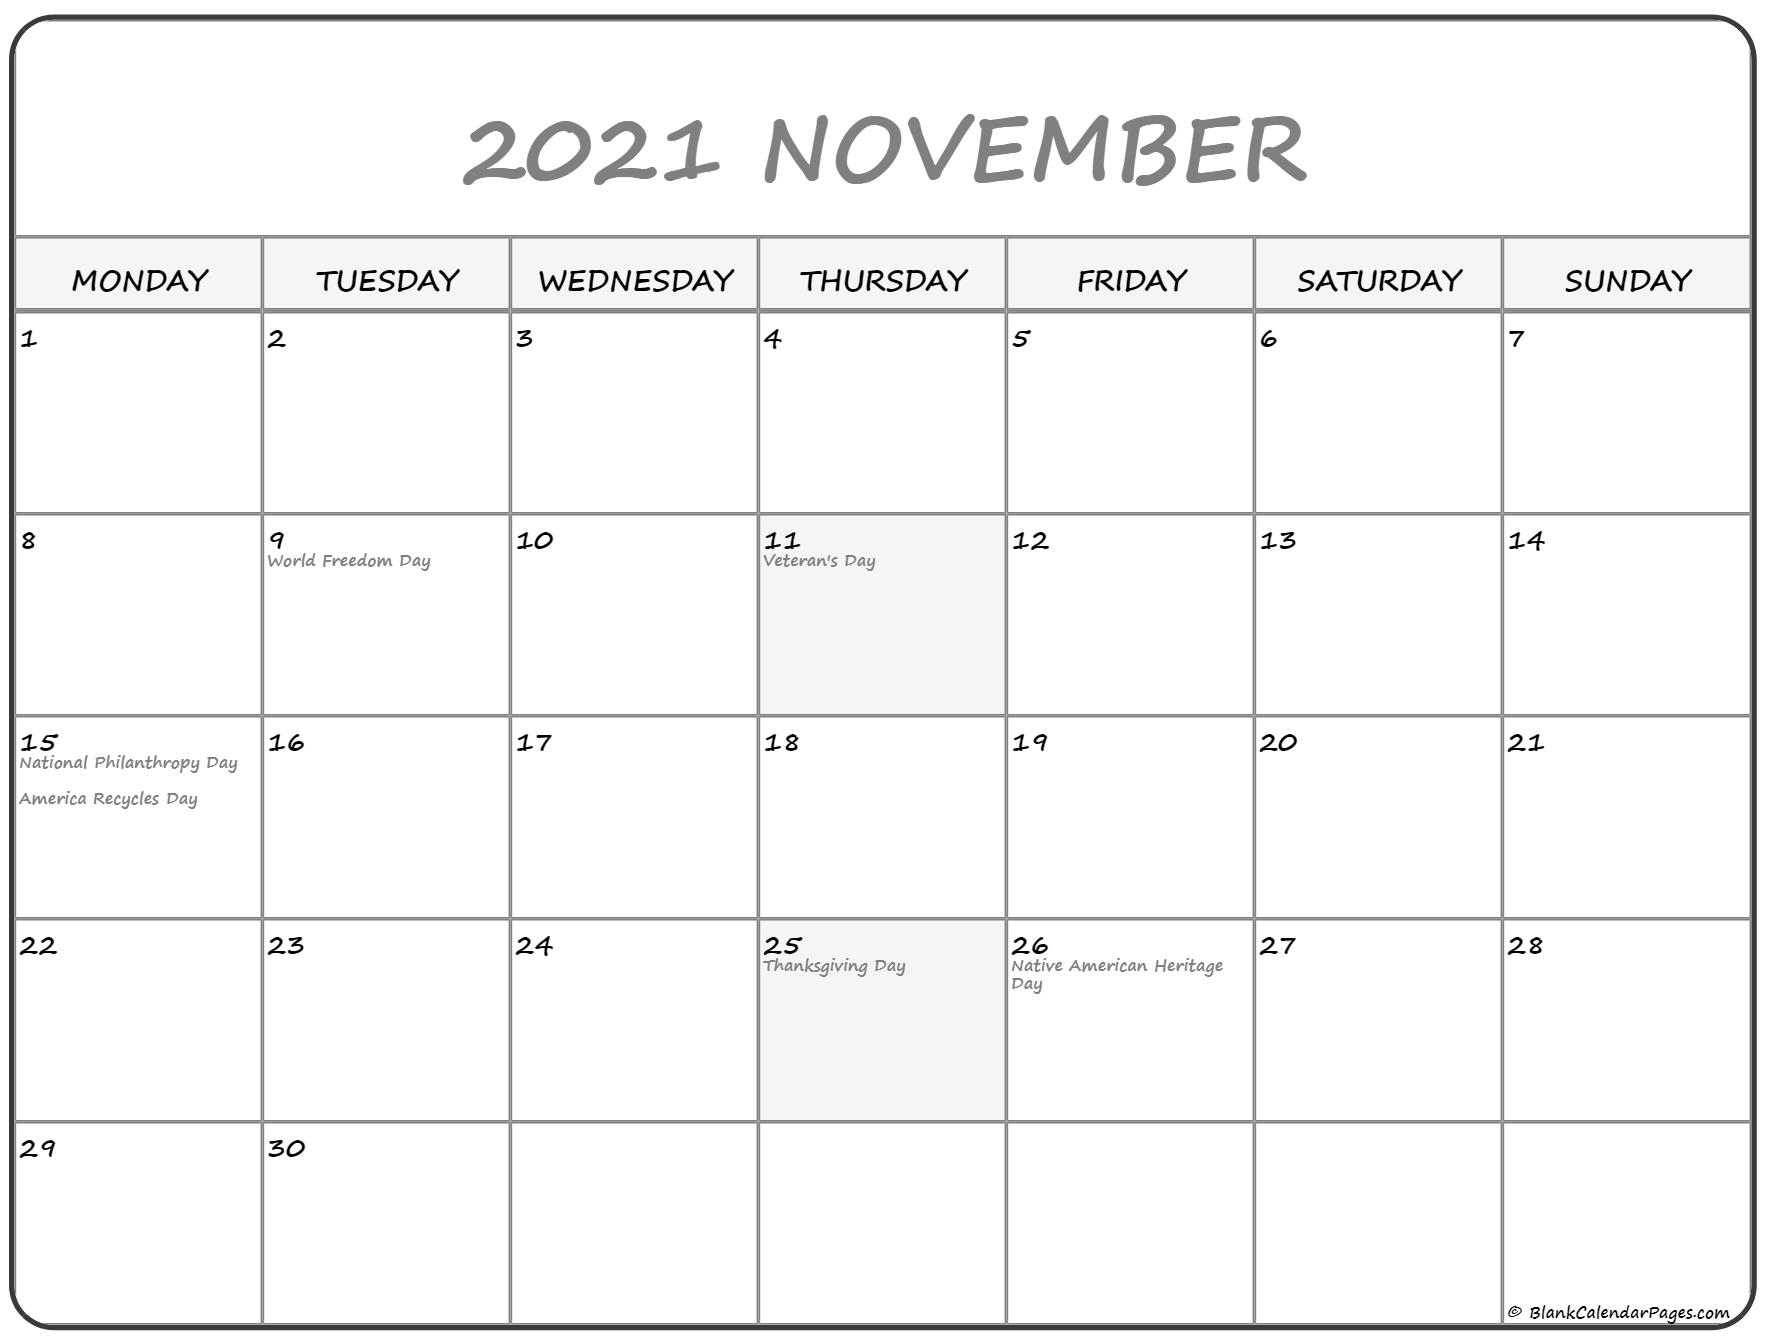 November 2021 Monday Calendar | Monday To Sunday